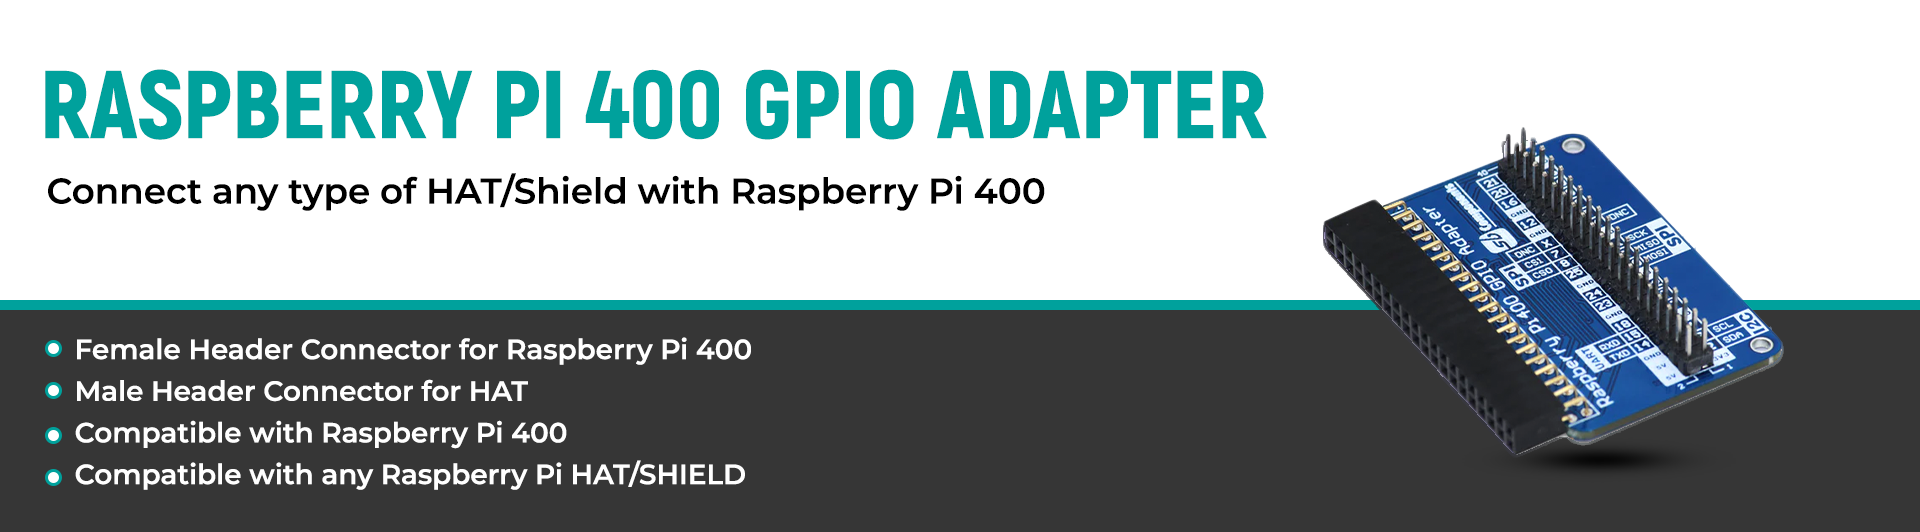 Raspberry Pi 400 GPIO Adapter